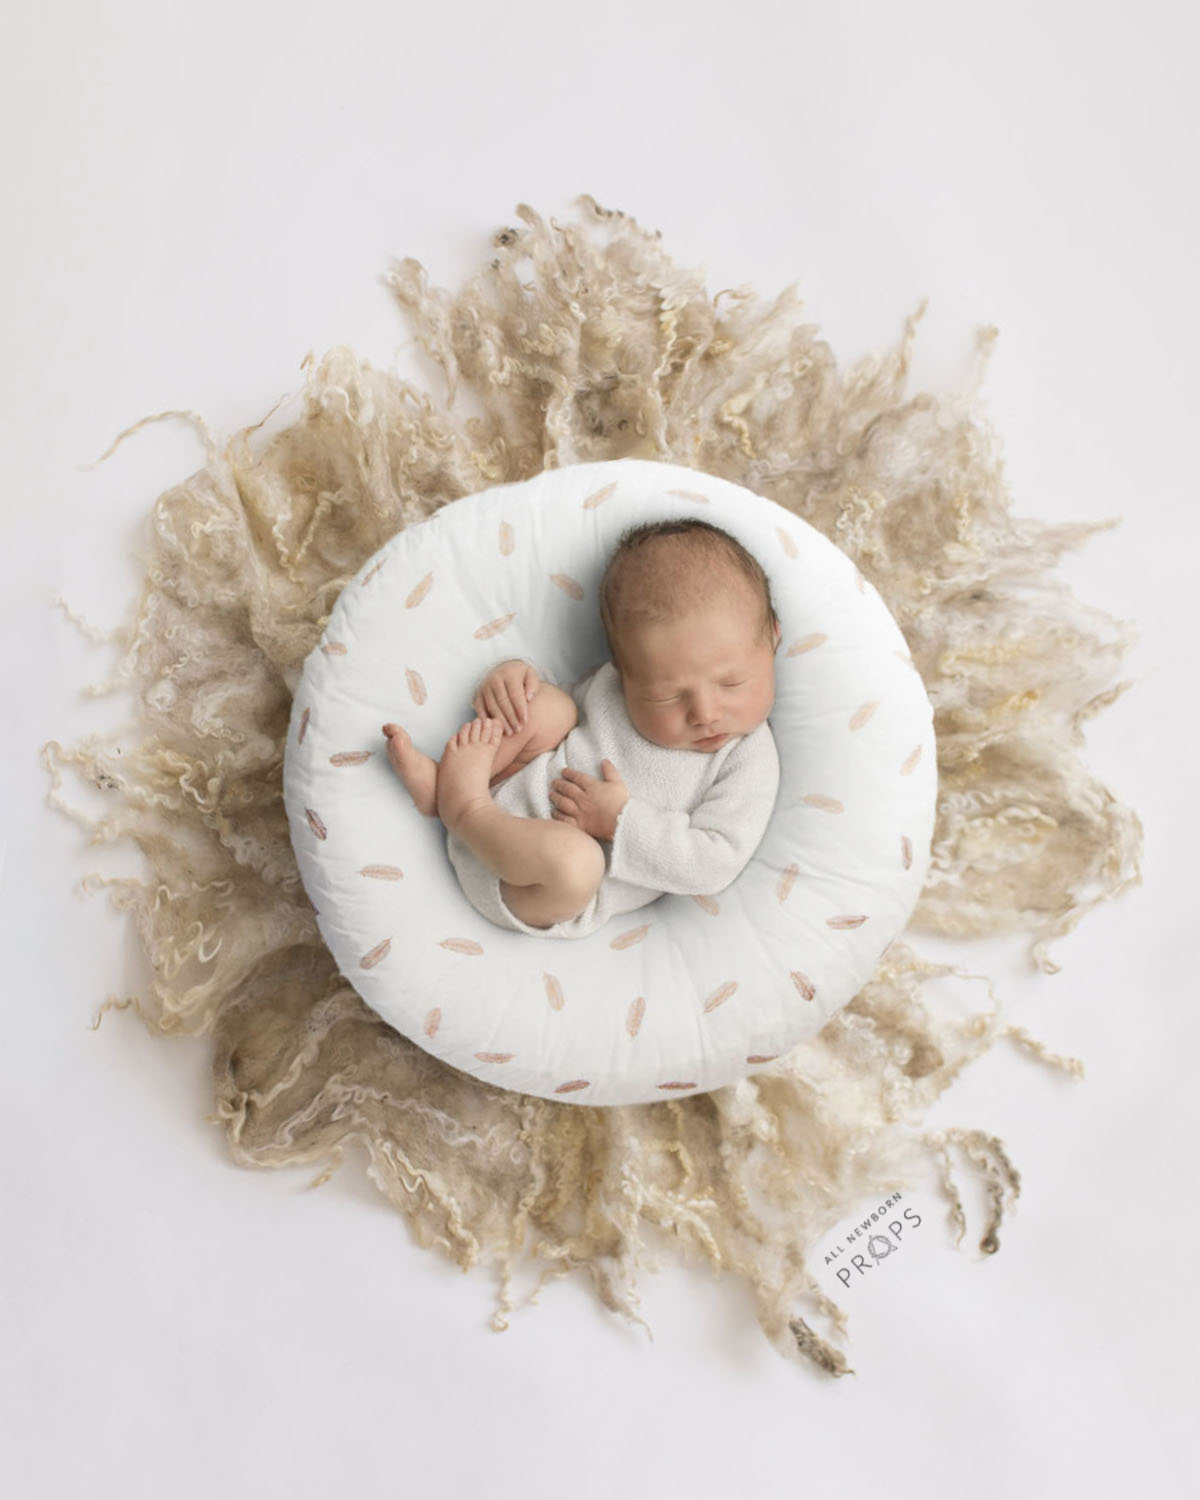 posing-pillow-newborn-prop-for-photography-session-Accessoire-für-das-Babyposing-white-boy-eu